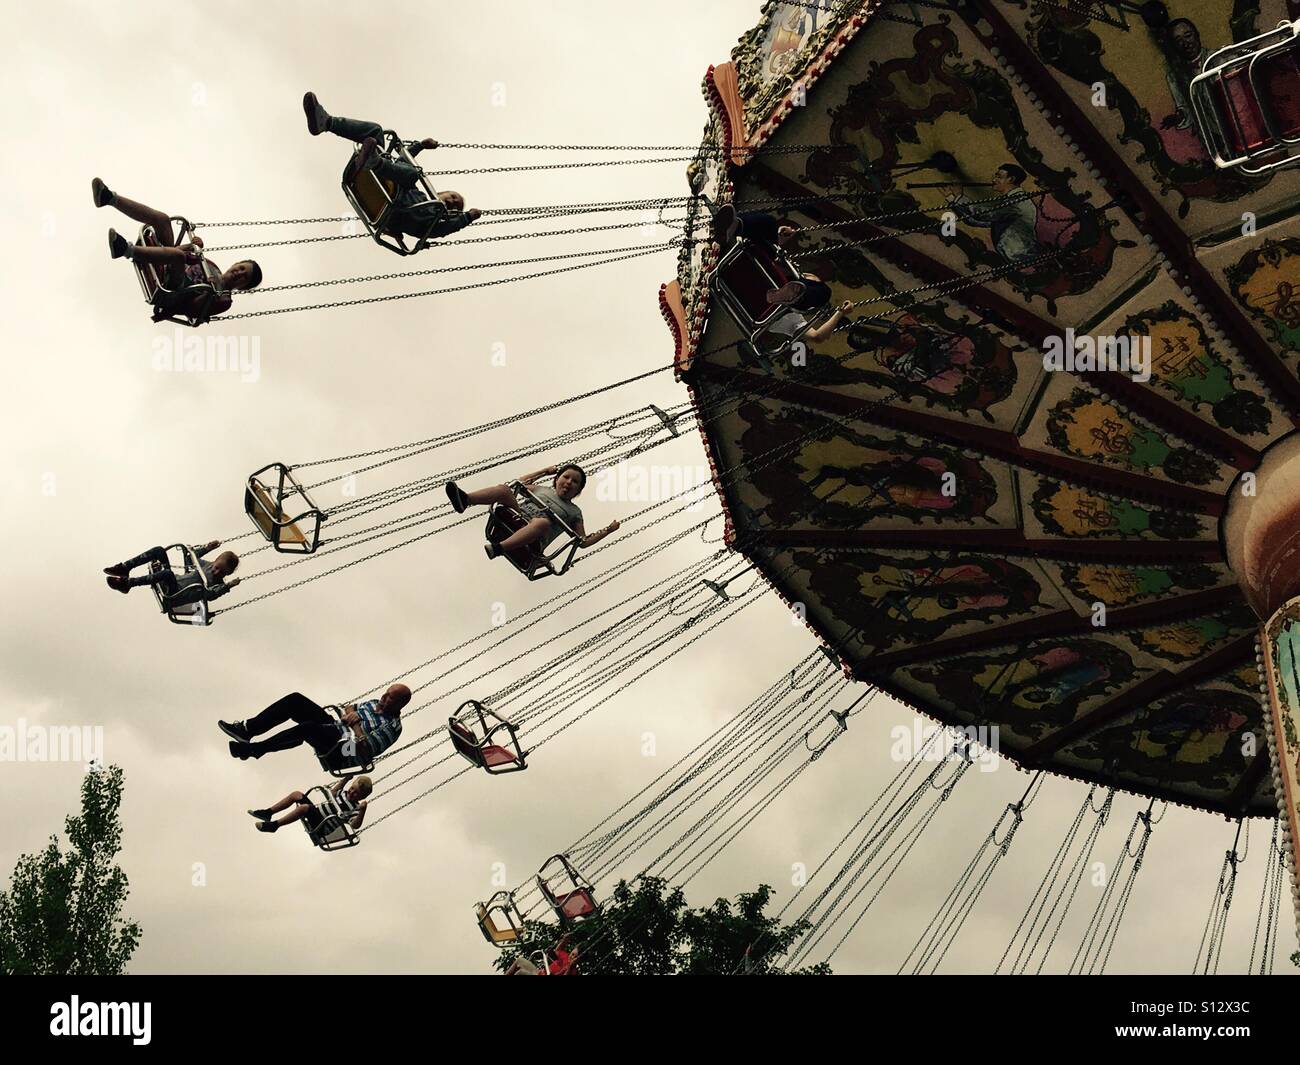 Swings flying through the sky Stock Photo